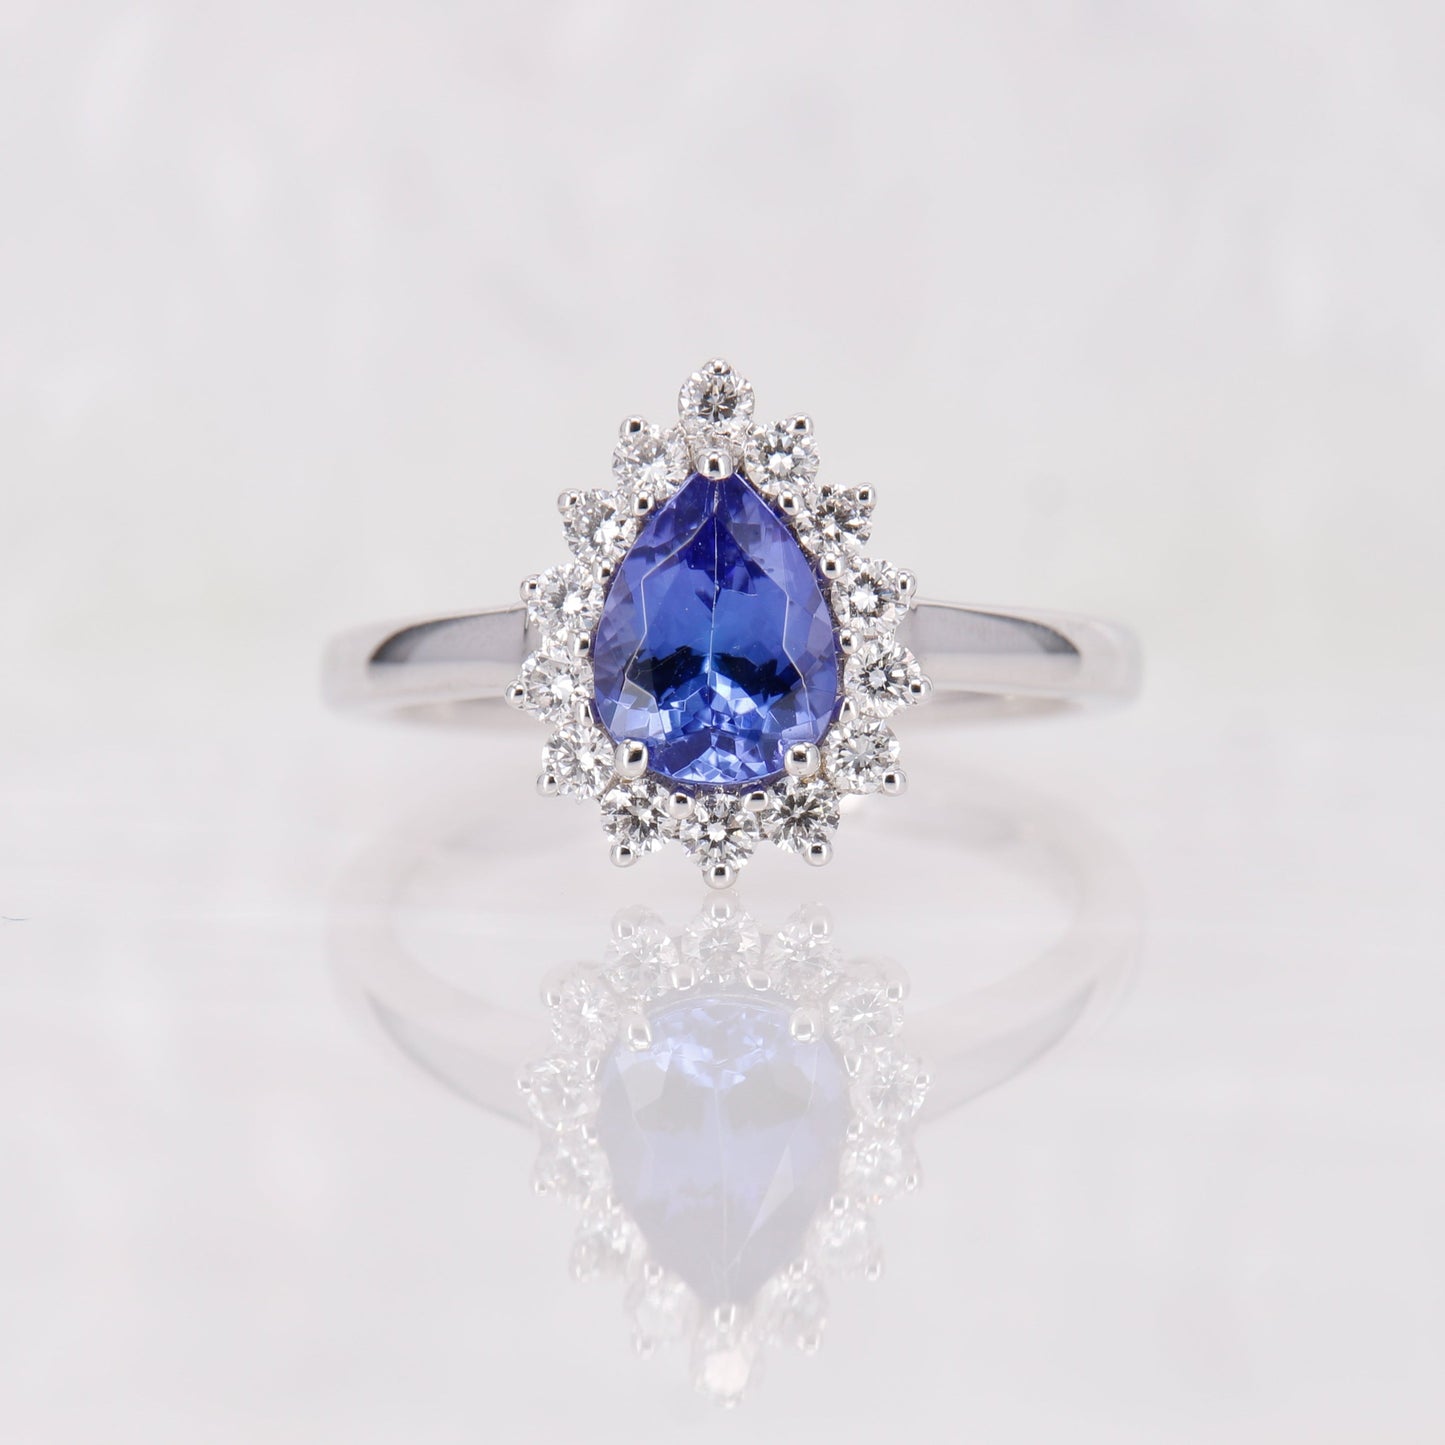 Tanzanite and Diamond Ring. Showcasing a captivating 1.32ct pear-cut deep blue tanzanite encircled by a halo of shimmering diamonds